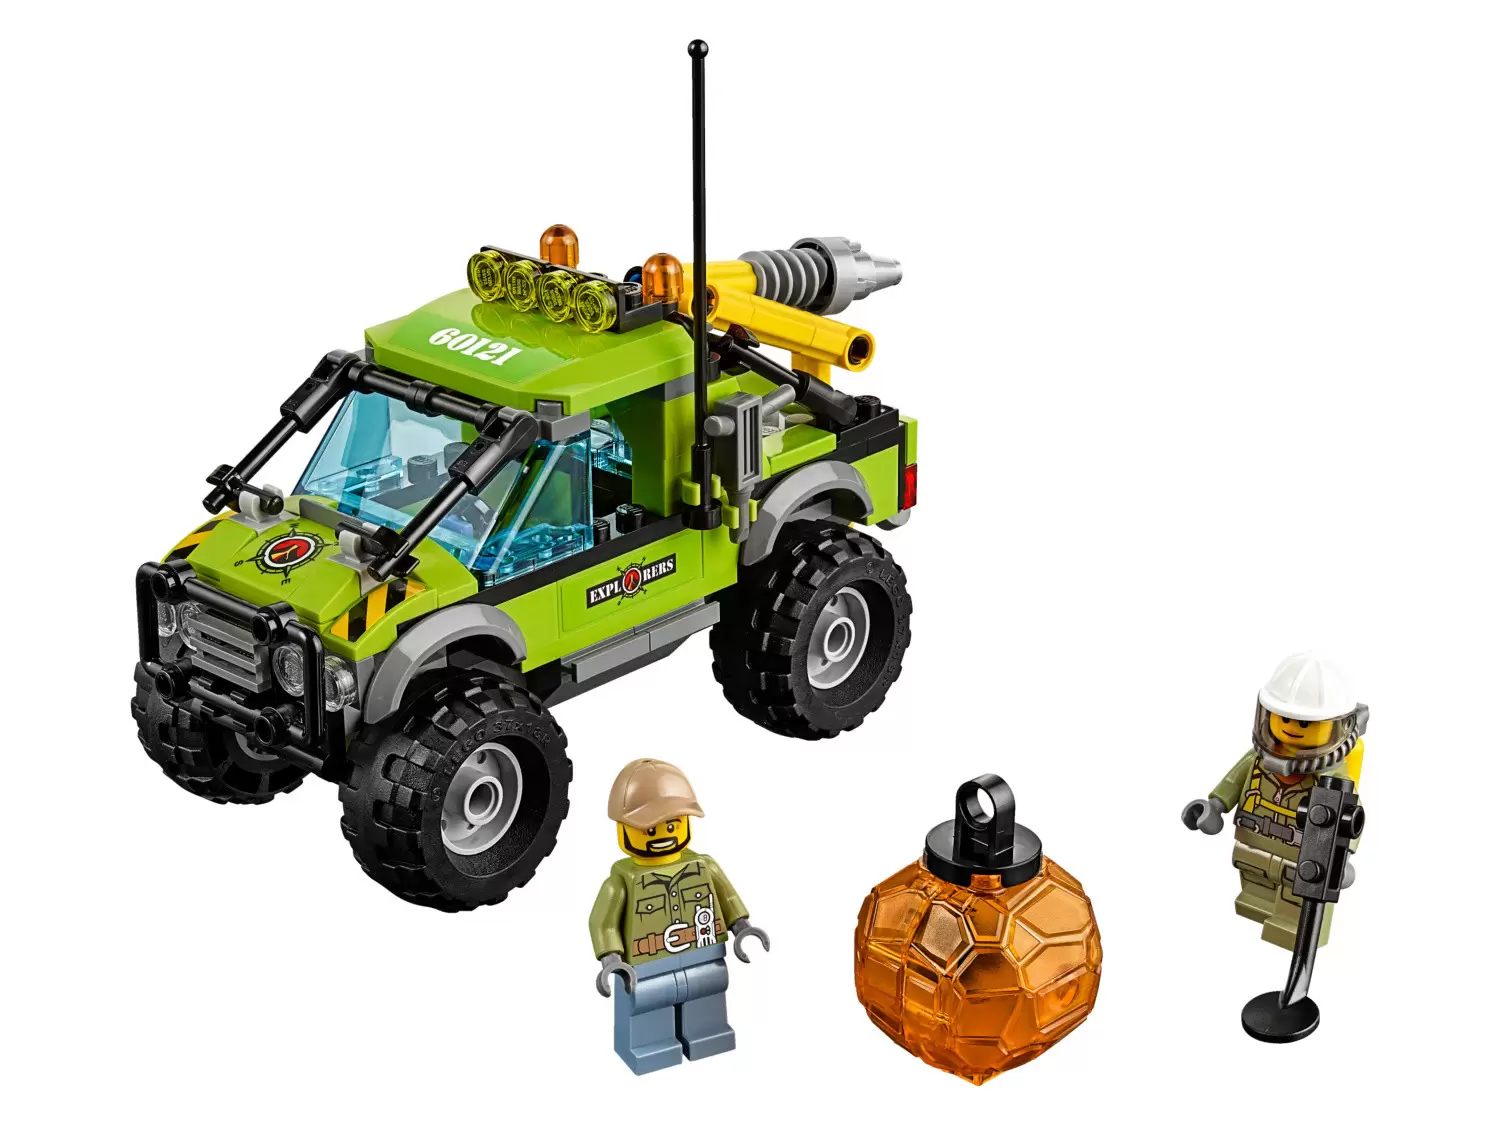 LEGO CITY - Volcano Exploration Truck